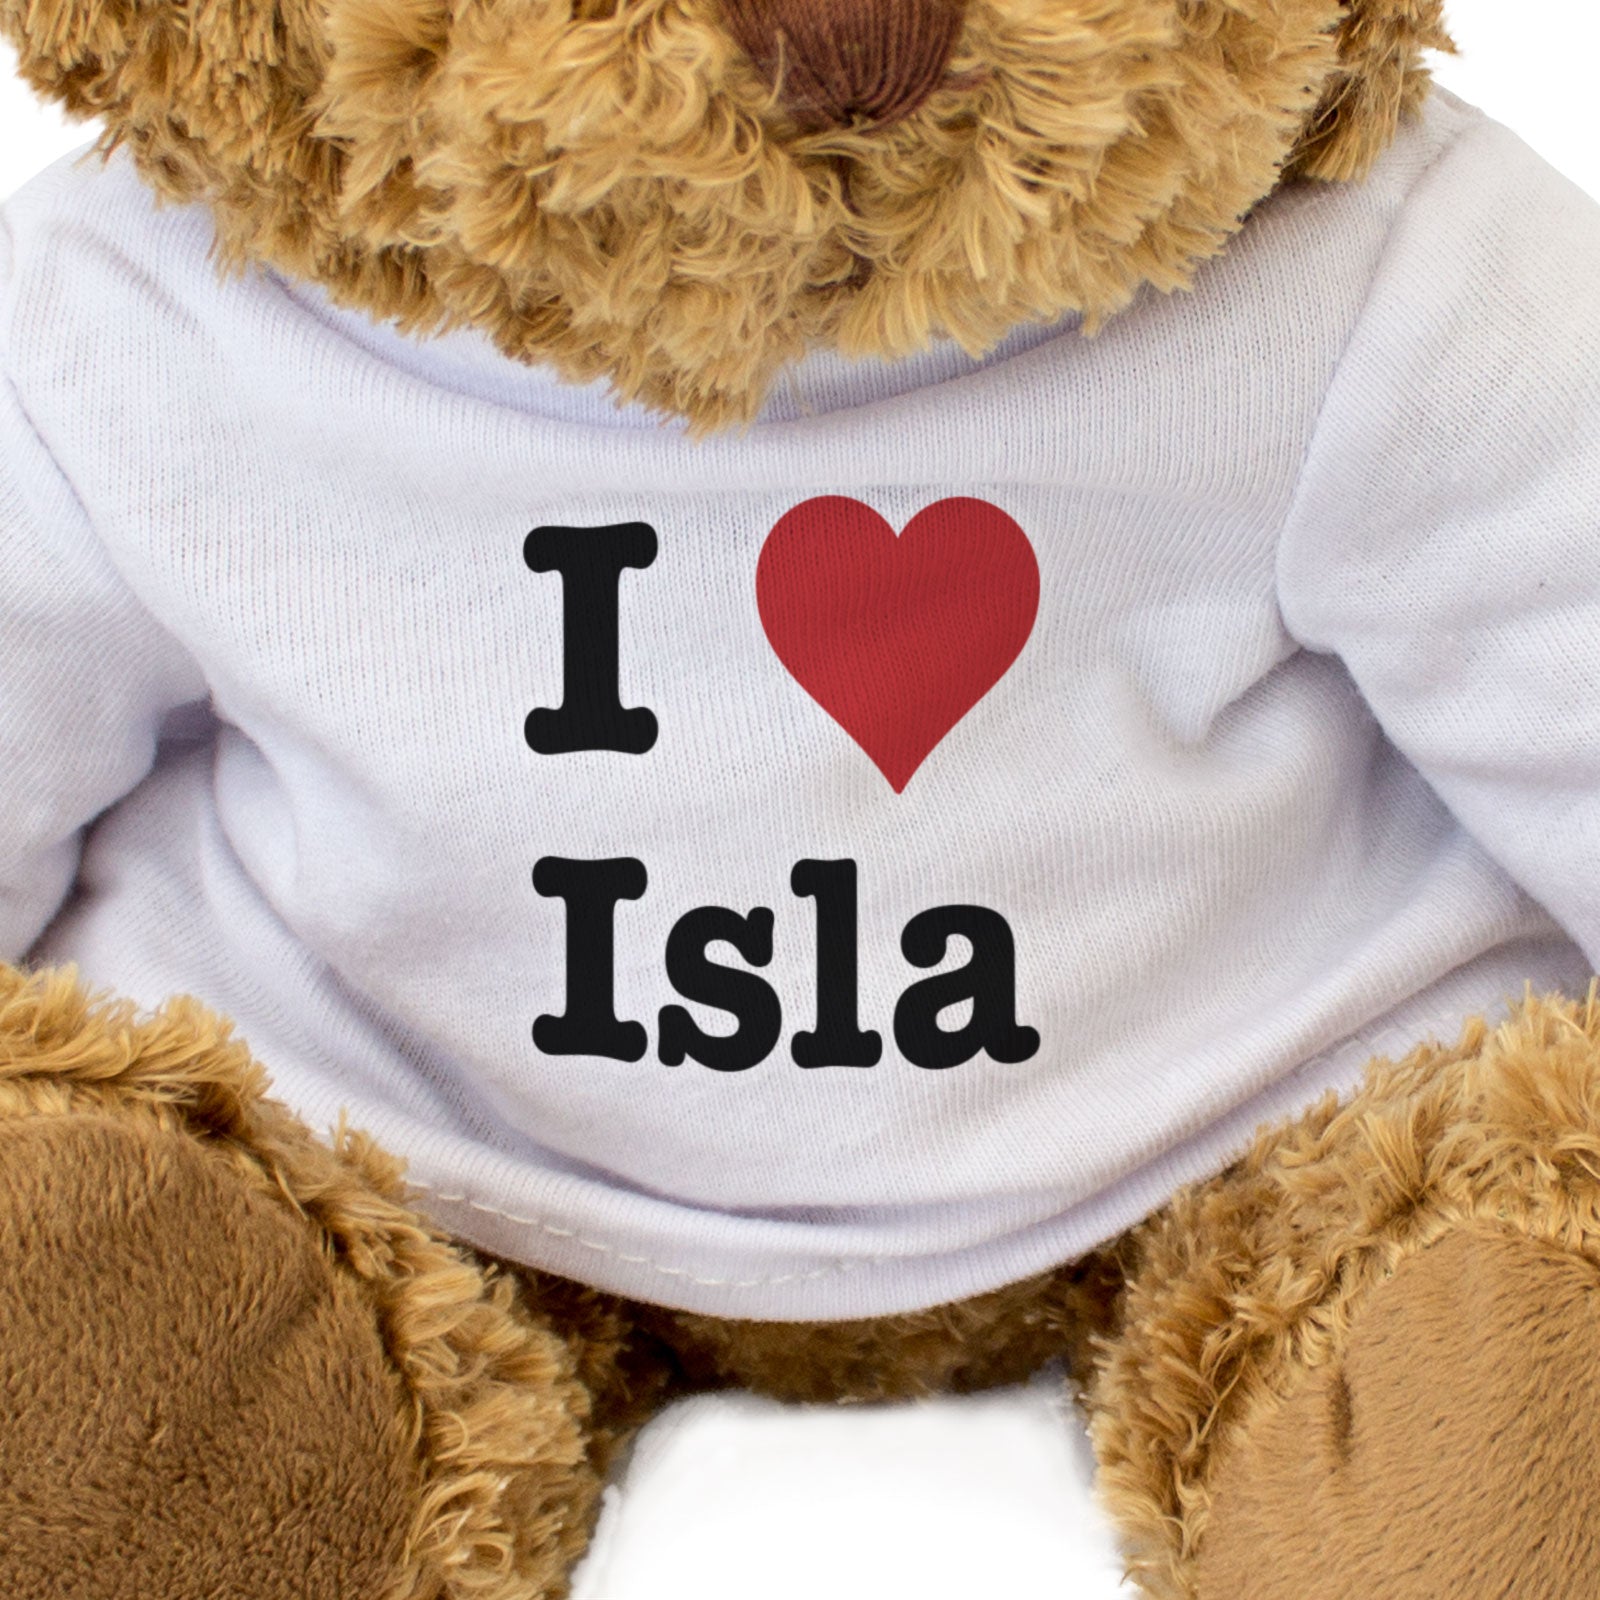 I Love Isla - Teddy Bear